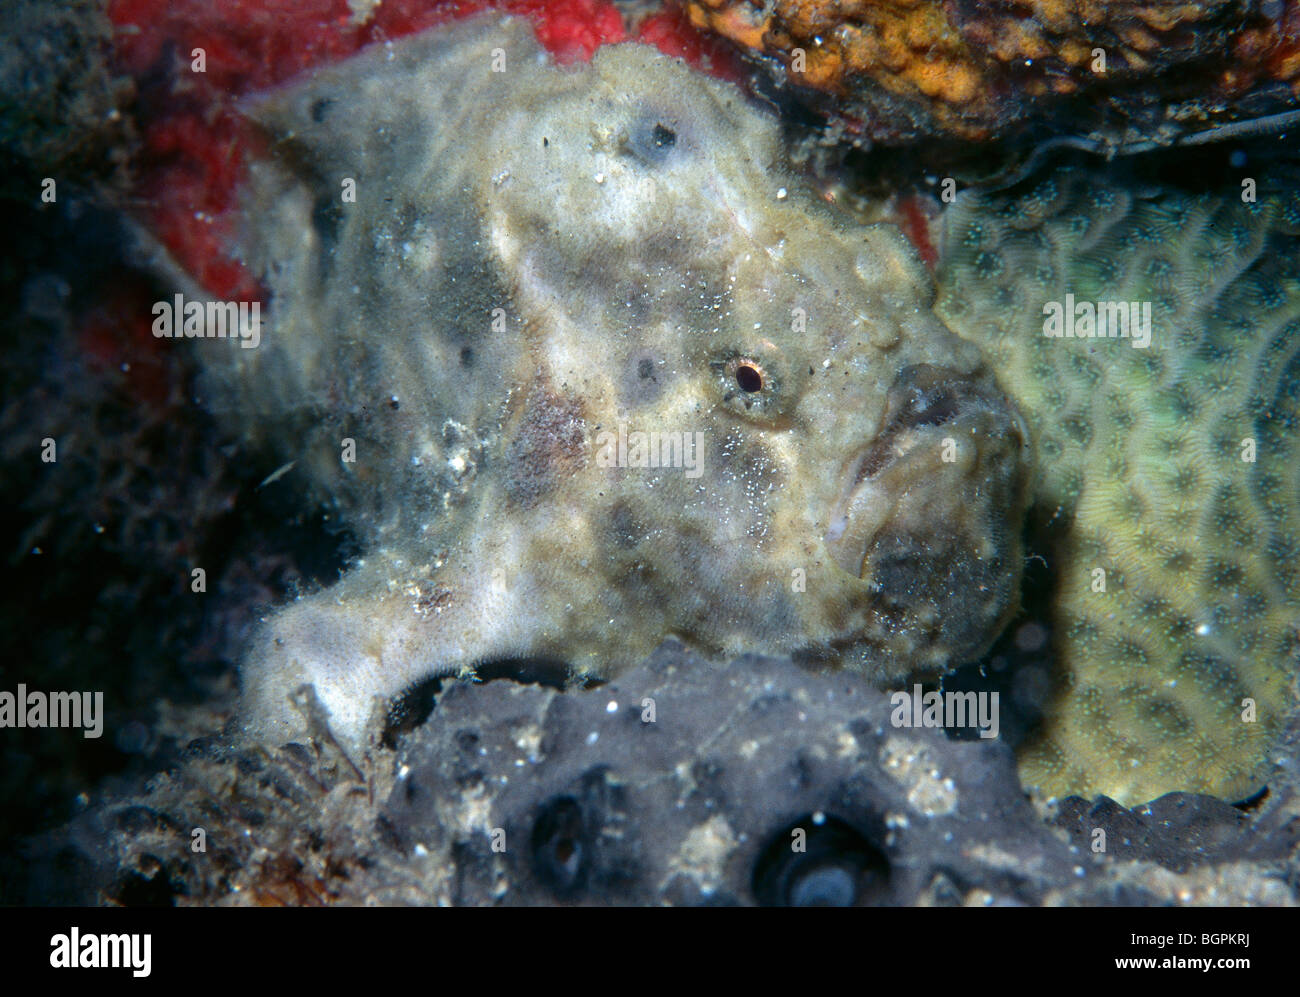 Longlure Frogfish (Antennarius multiocellatus) Stock Photo